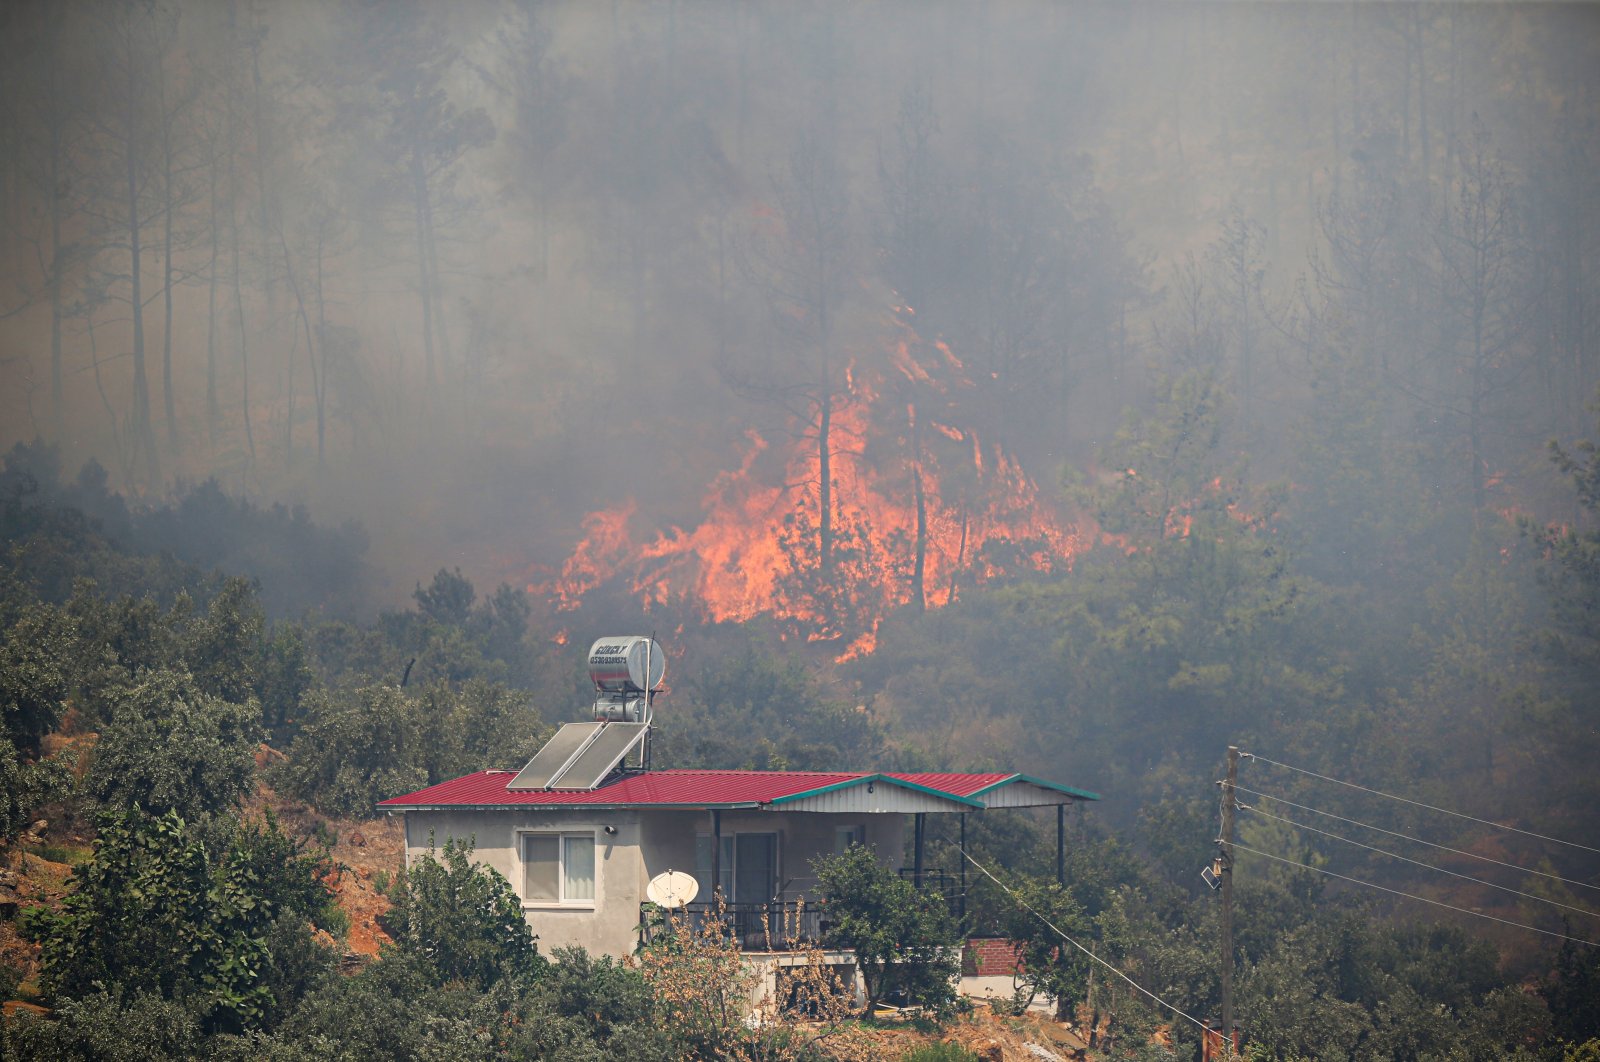 Kebakaran hutan mendorong evakuasi di Mersin . Türkiye selatan